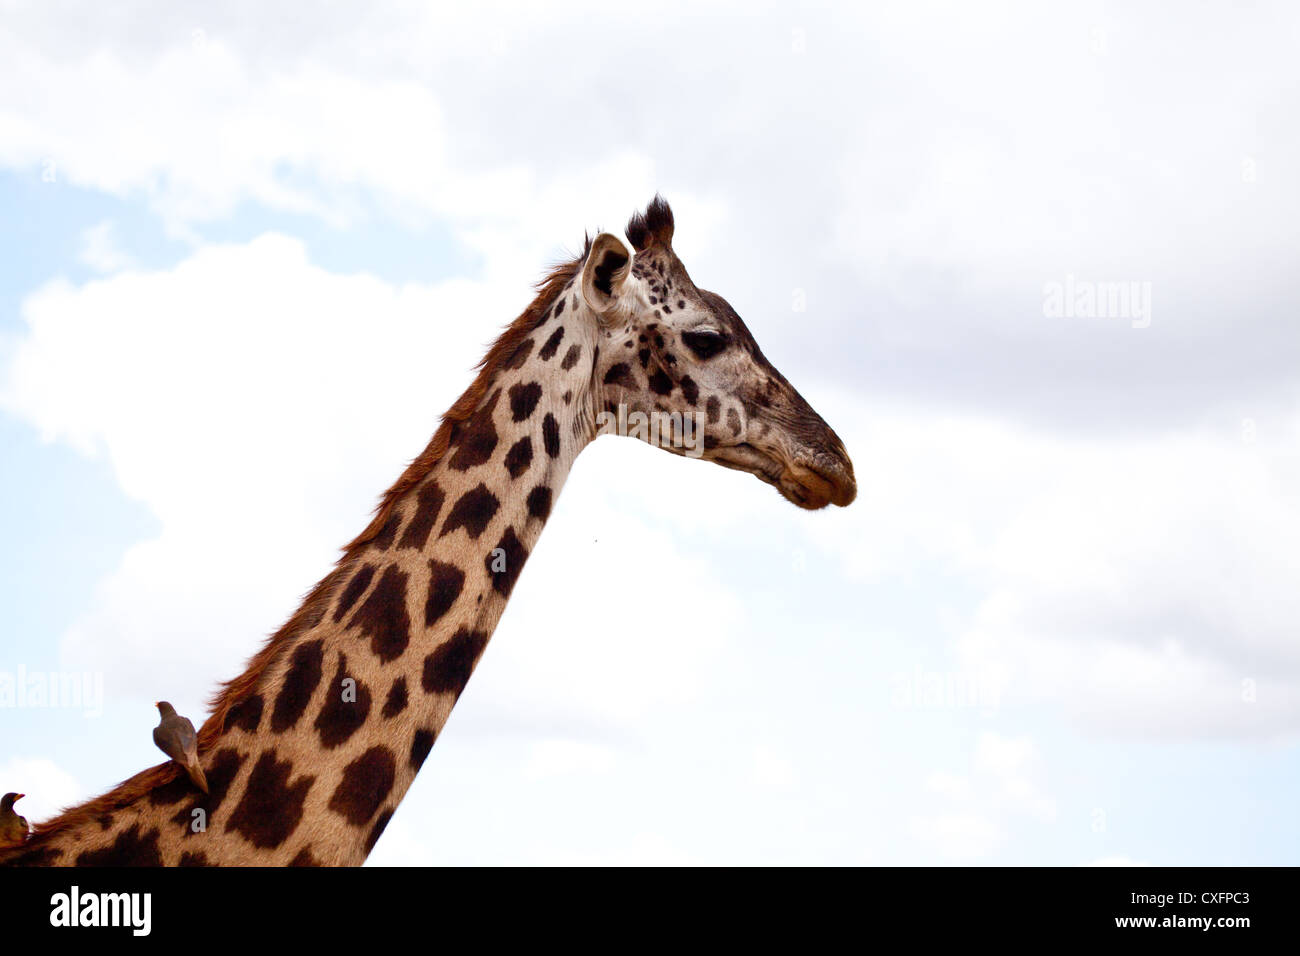 Giraffe auf der Savanne. Serengeti Nationalpark, Tansania Stockfoto